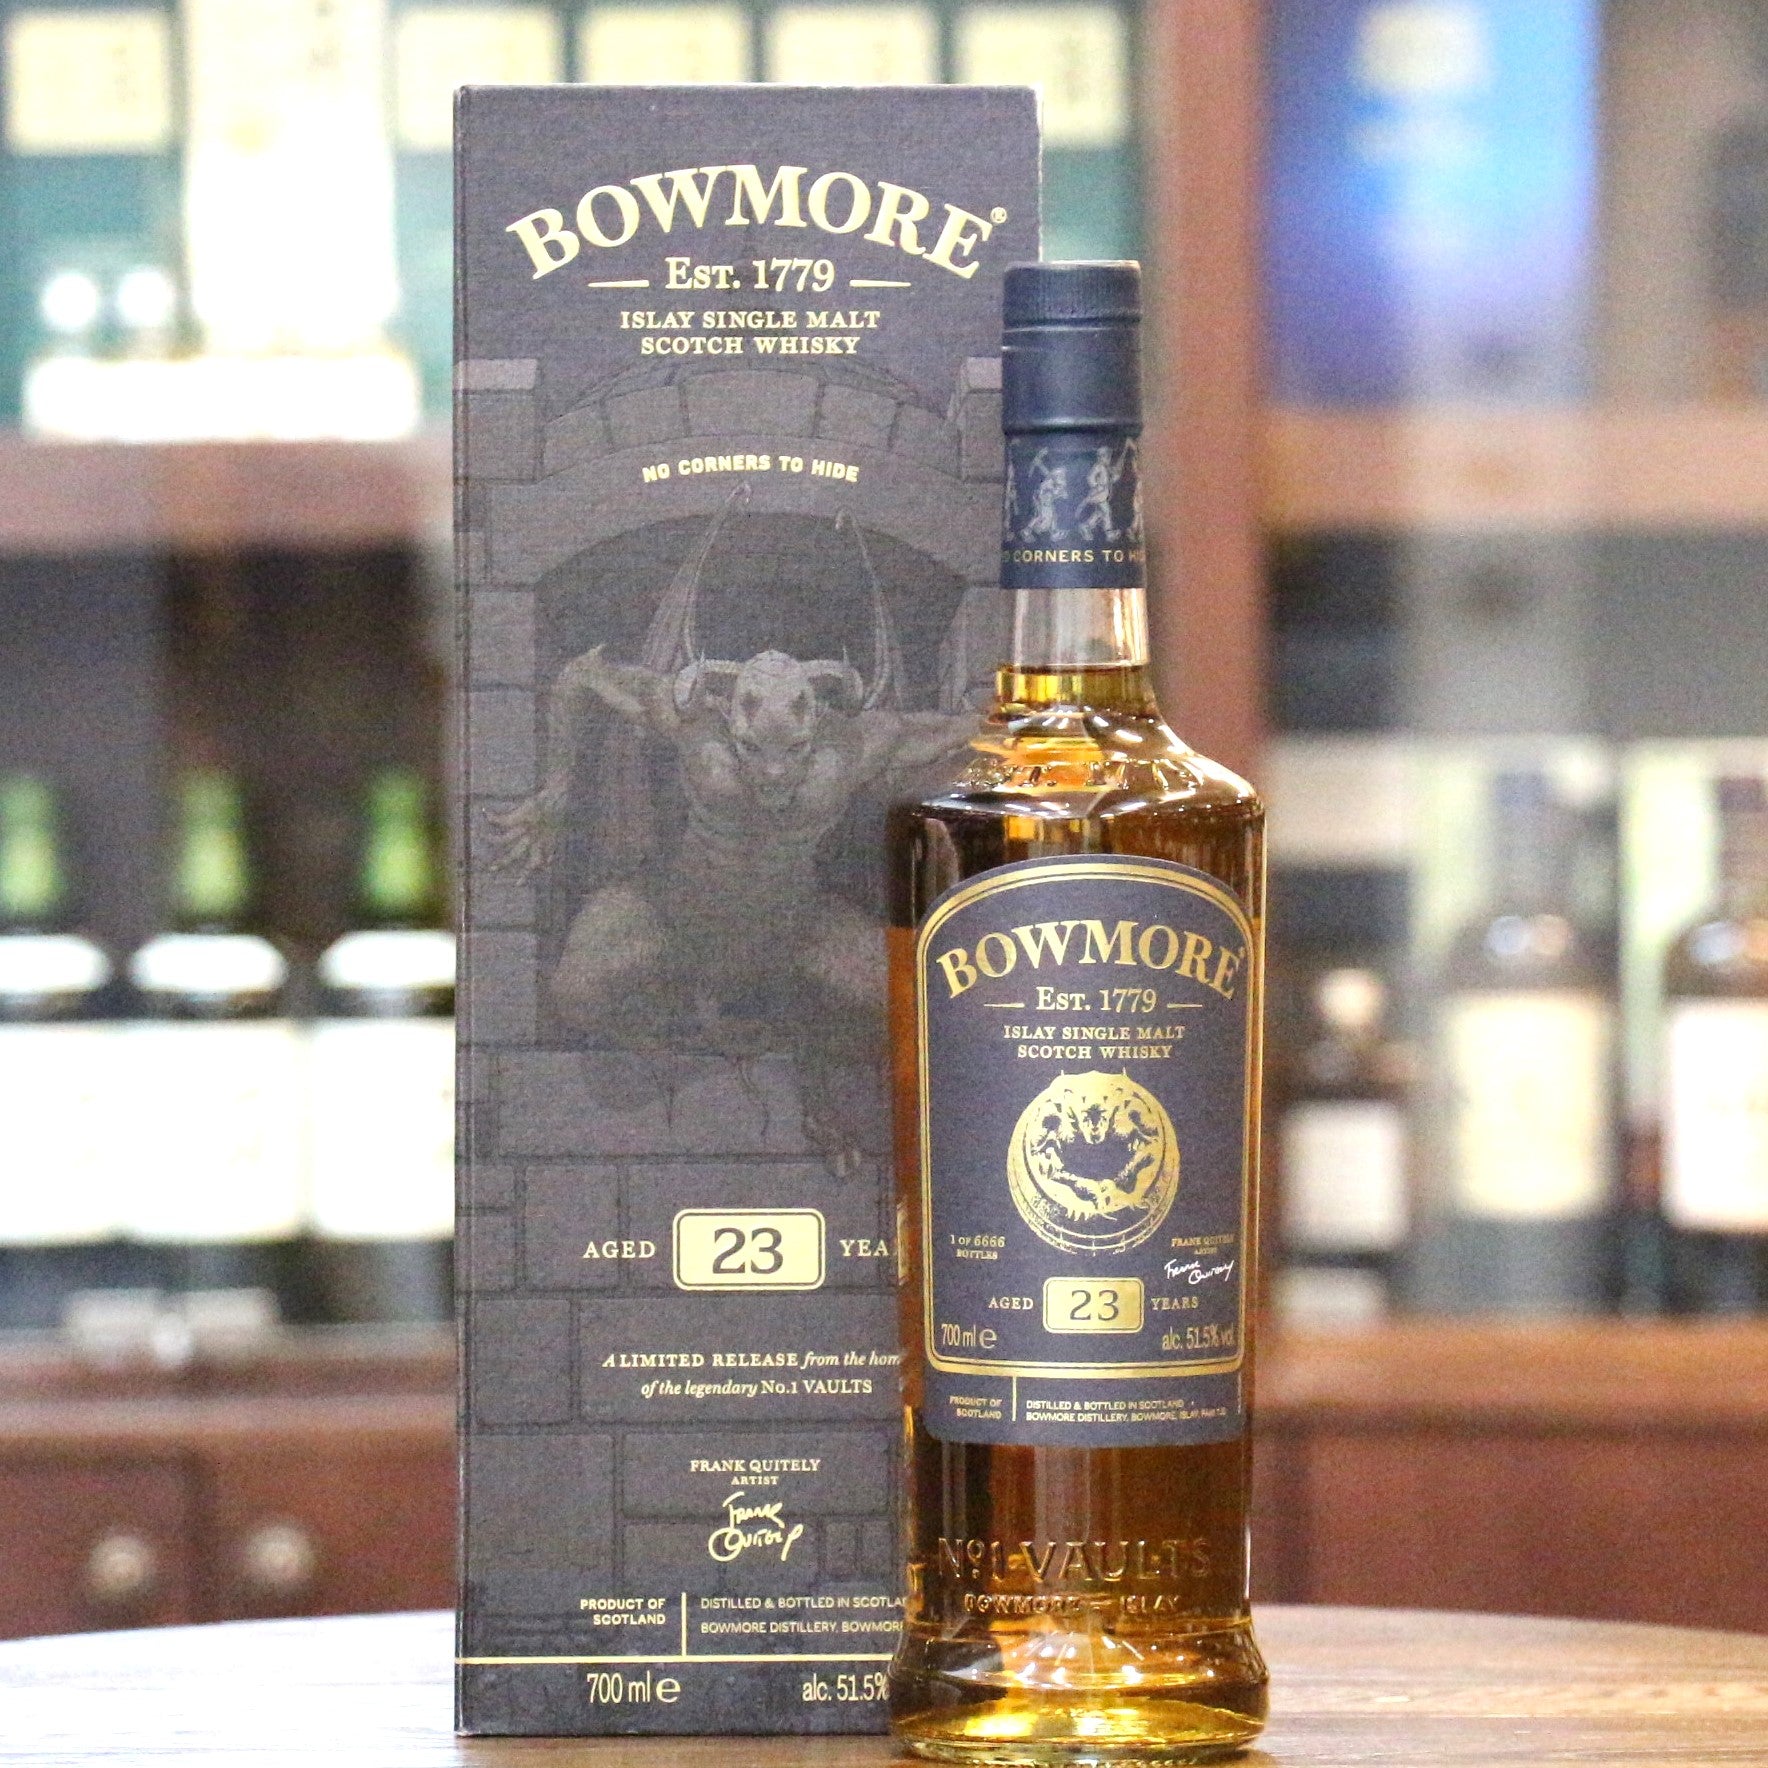 Bowmore 23 Years 'No Corners to Hide' Islay Single Malt Scotch Whisky